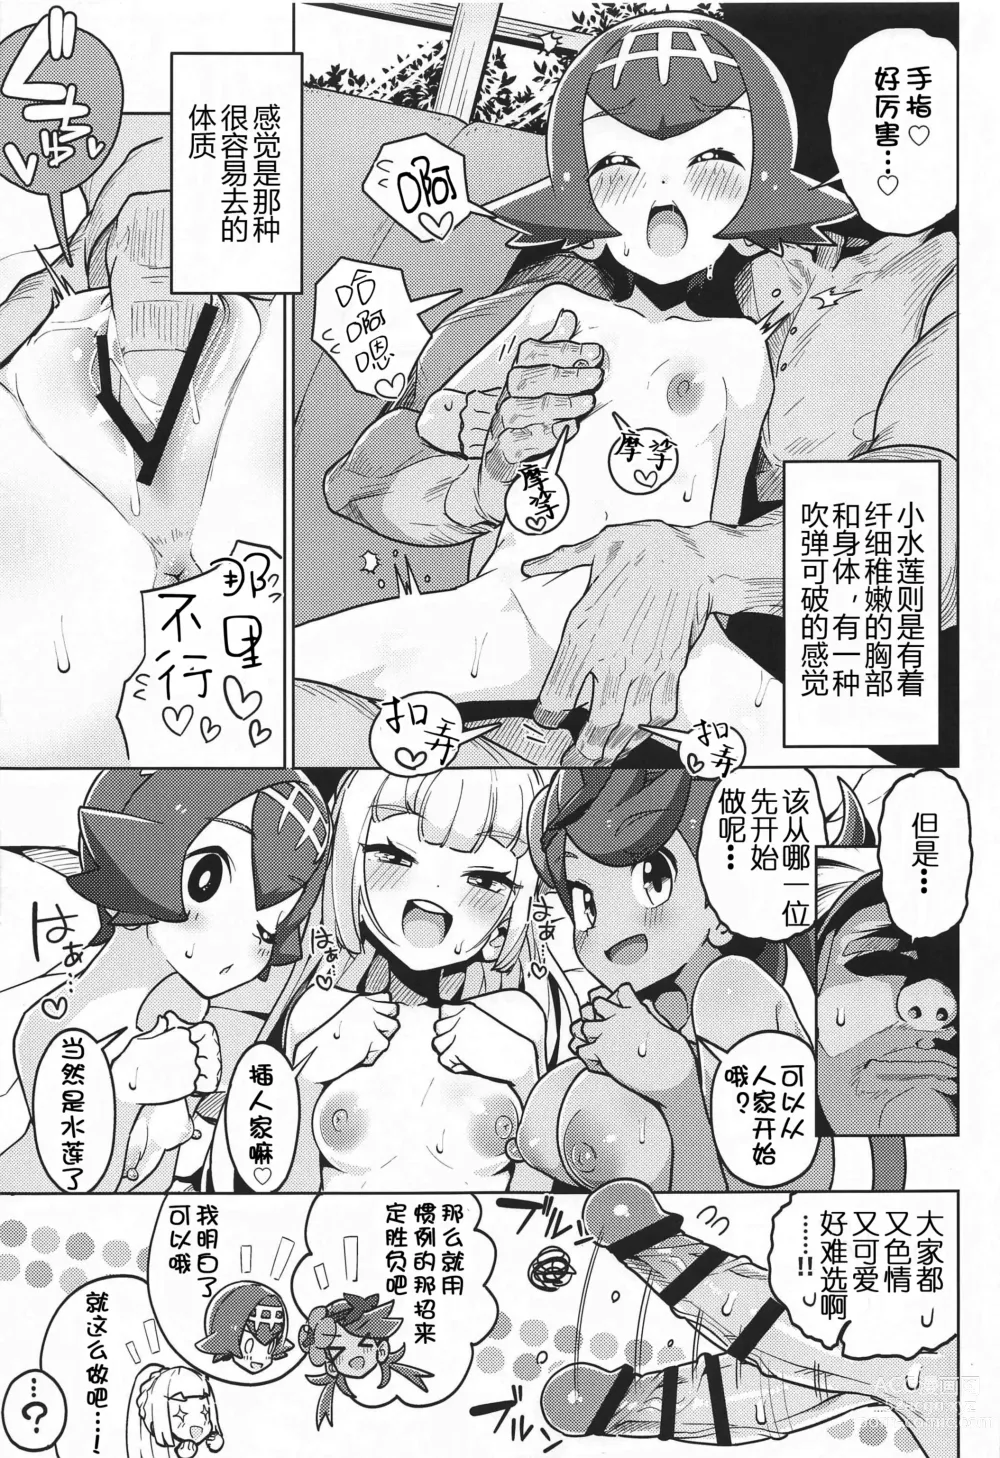 Page 11 of doujinshi 宝可碧池 2